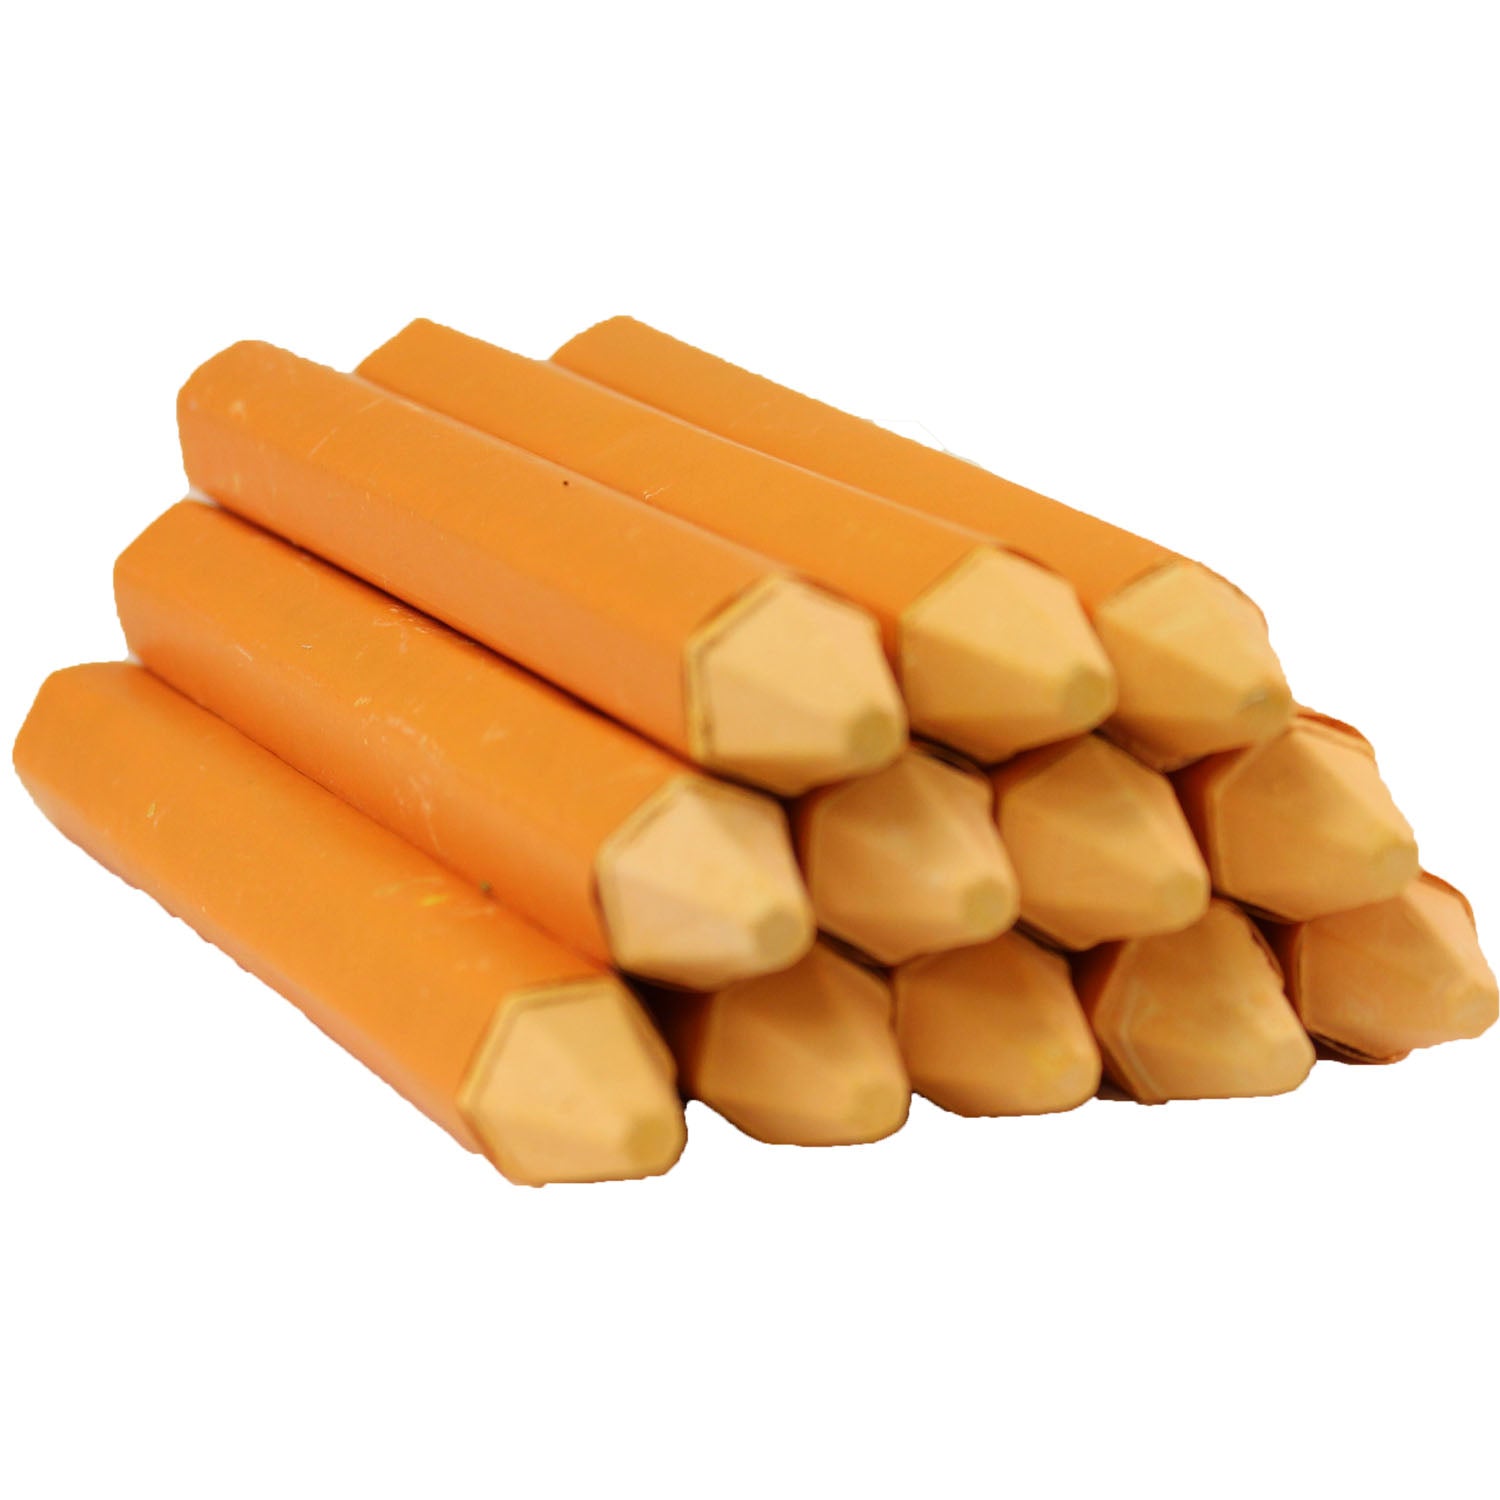 Orange Paint Sticks marker- Markal 12 paint sticks in the box